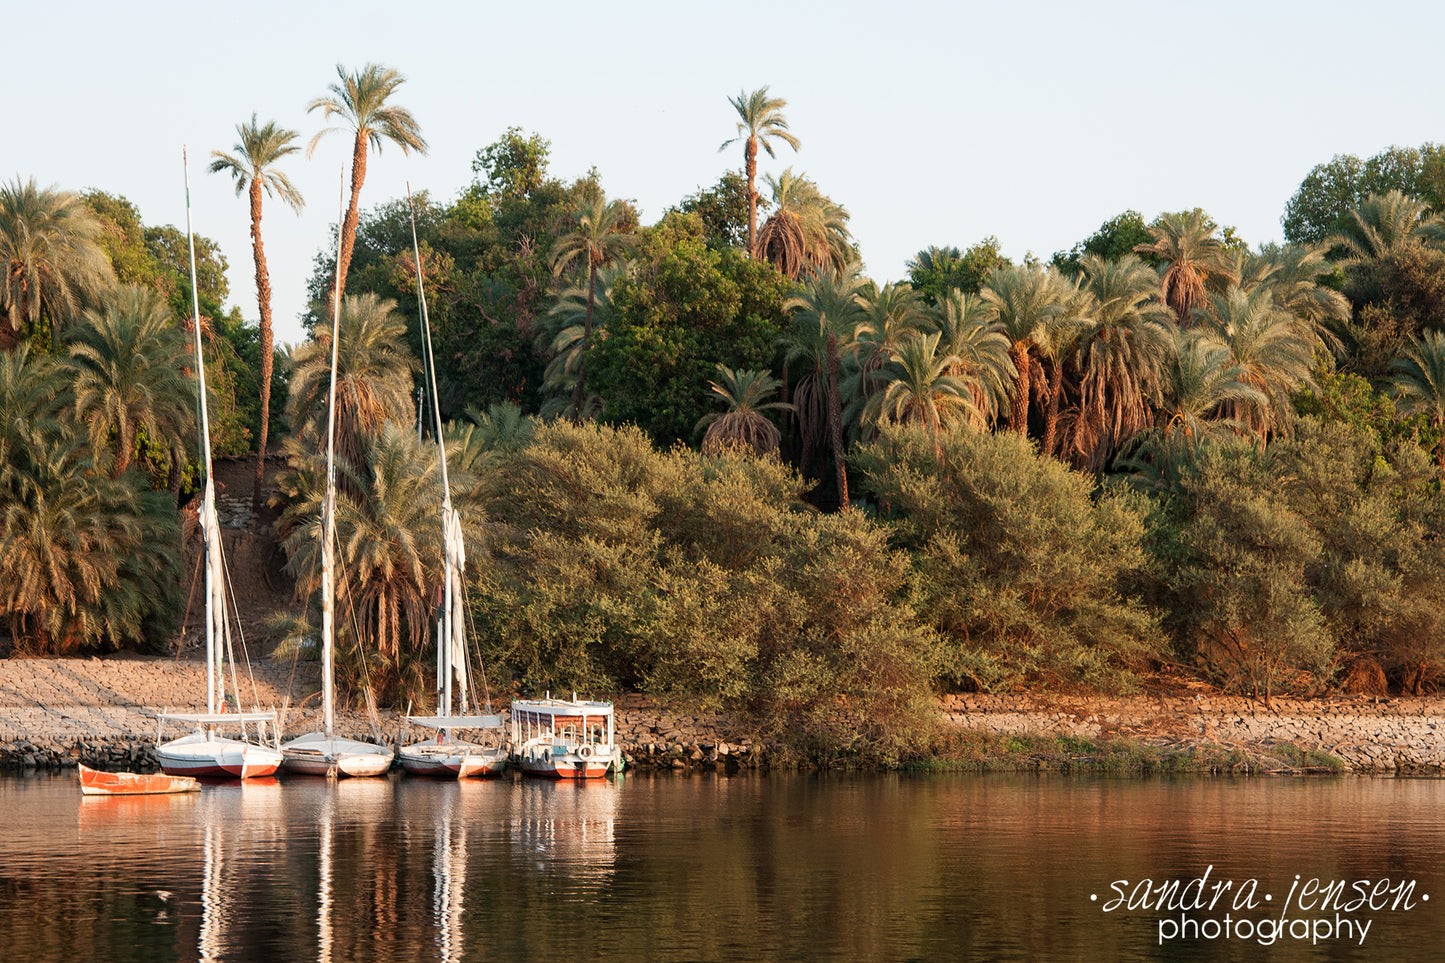 Print - Egypt, Aswan - The Nile 2